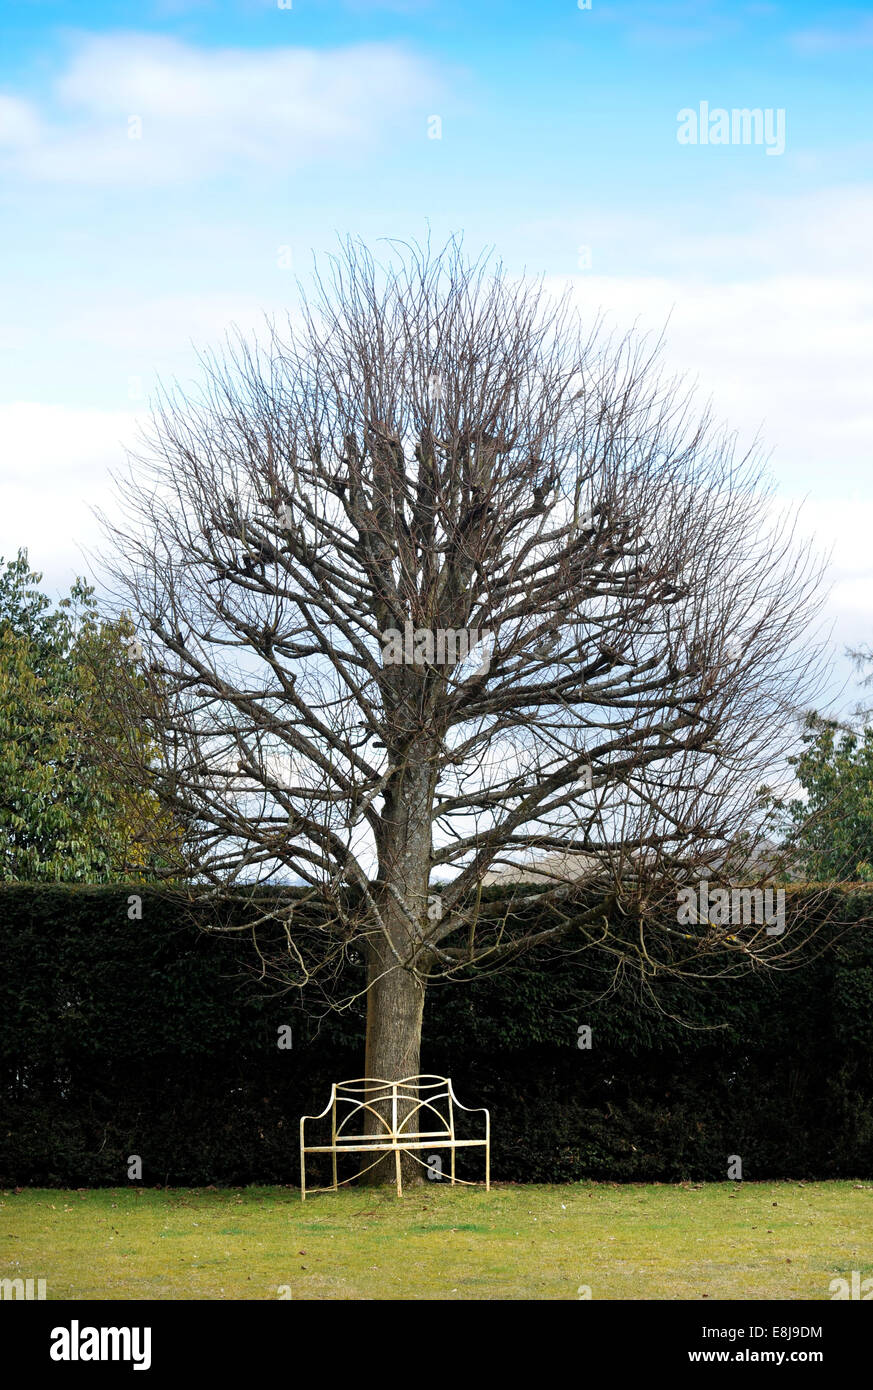 Garden tree in winter with iron bench UK Stock Photo